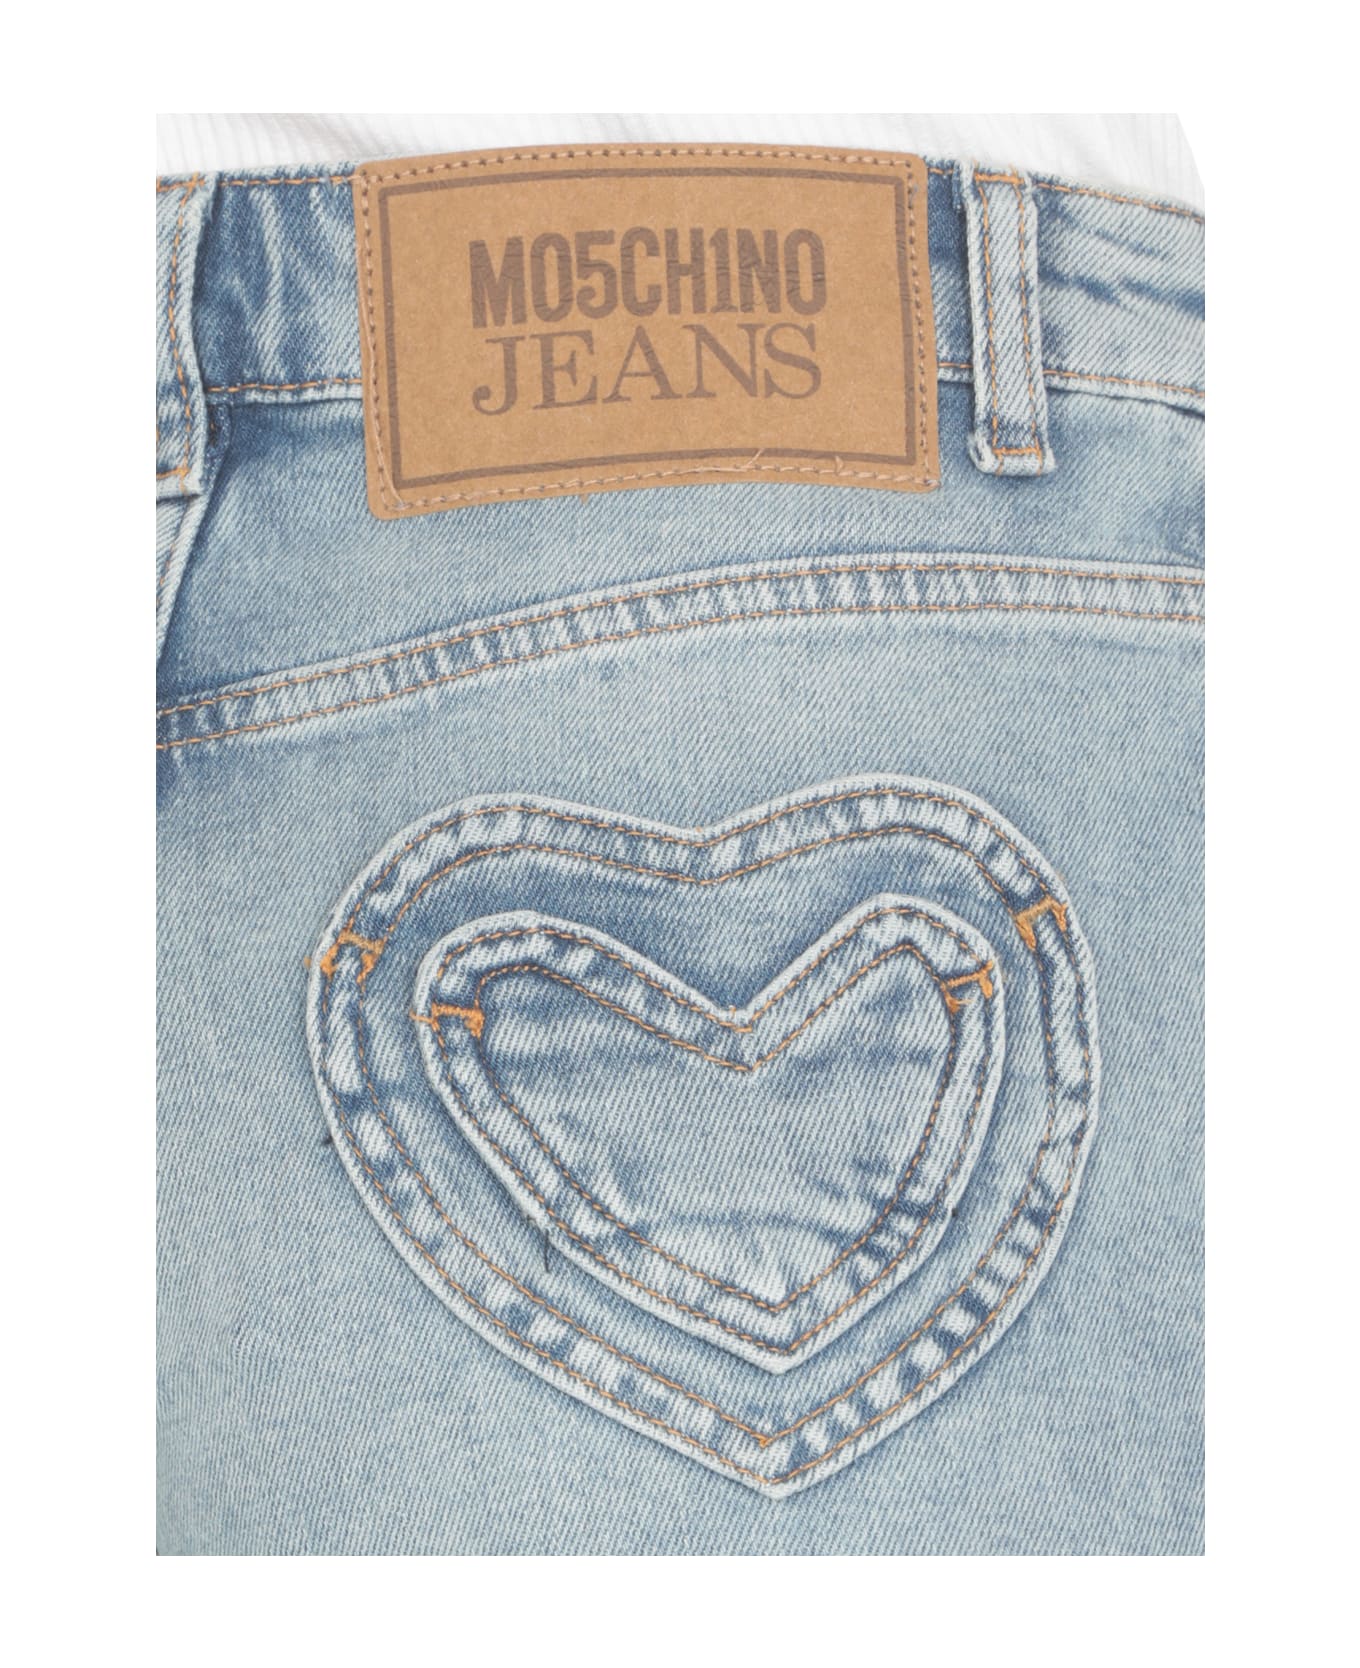 M05CH1N0 Jeans Cotton Shorts - Light Blue ショートパンツ